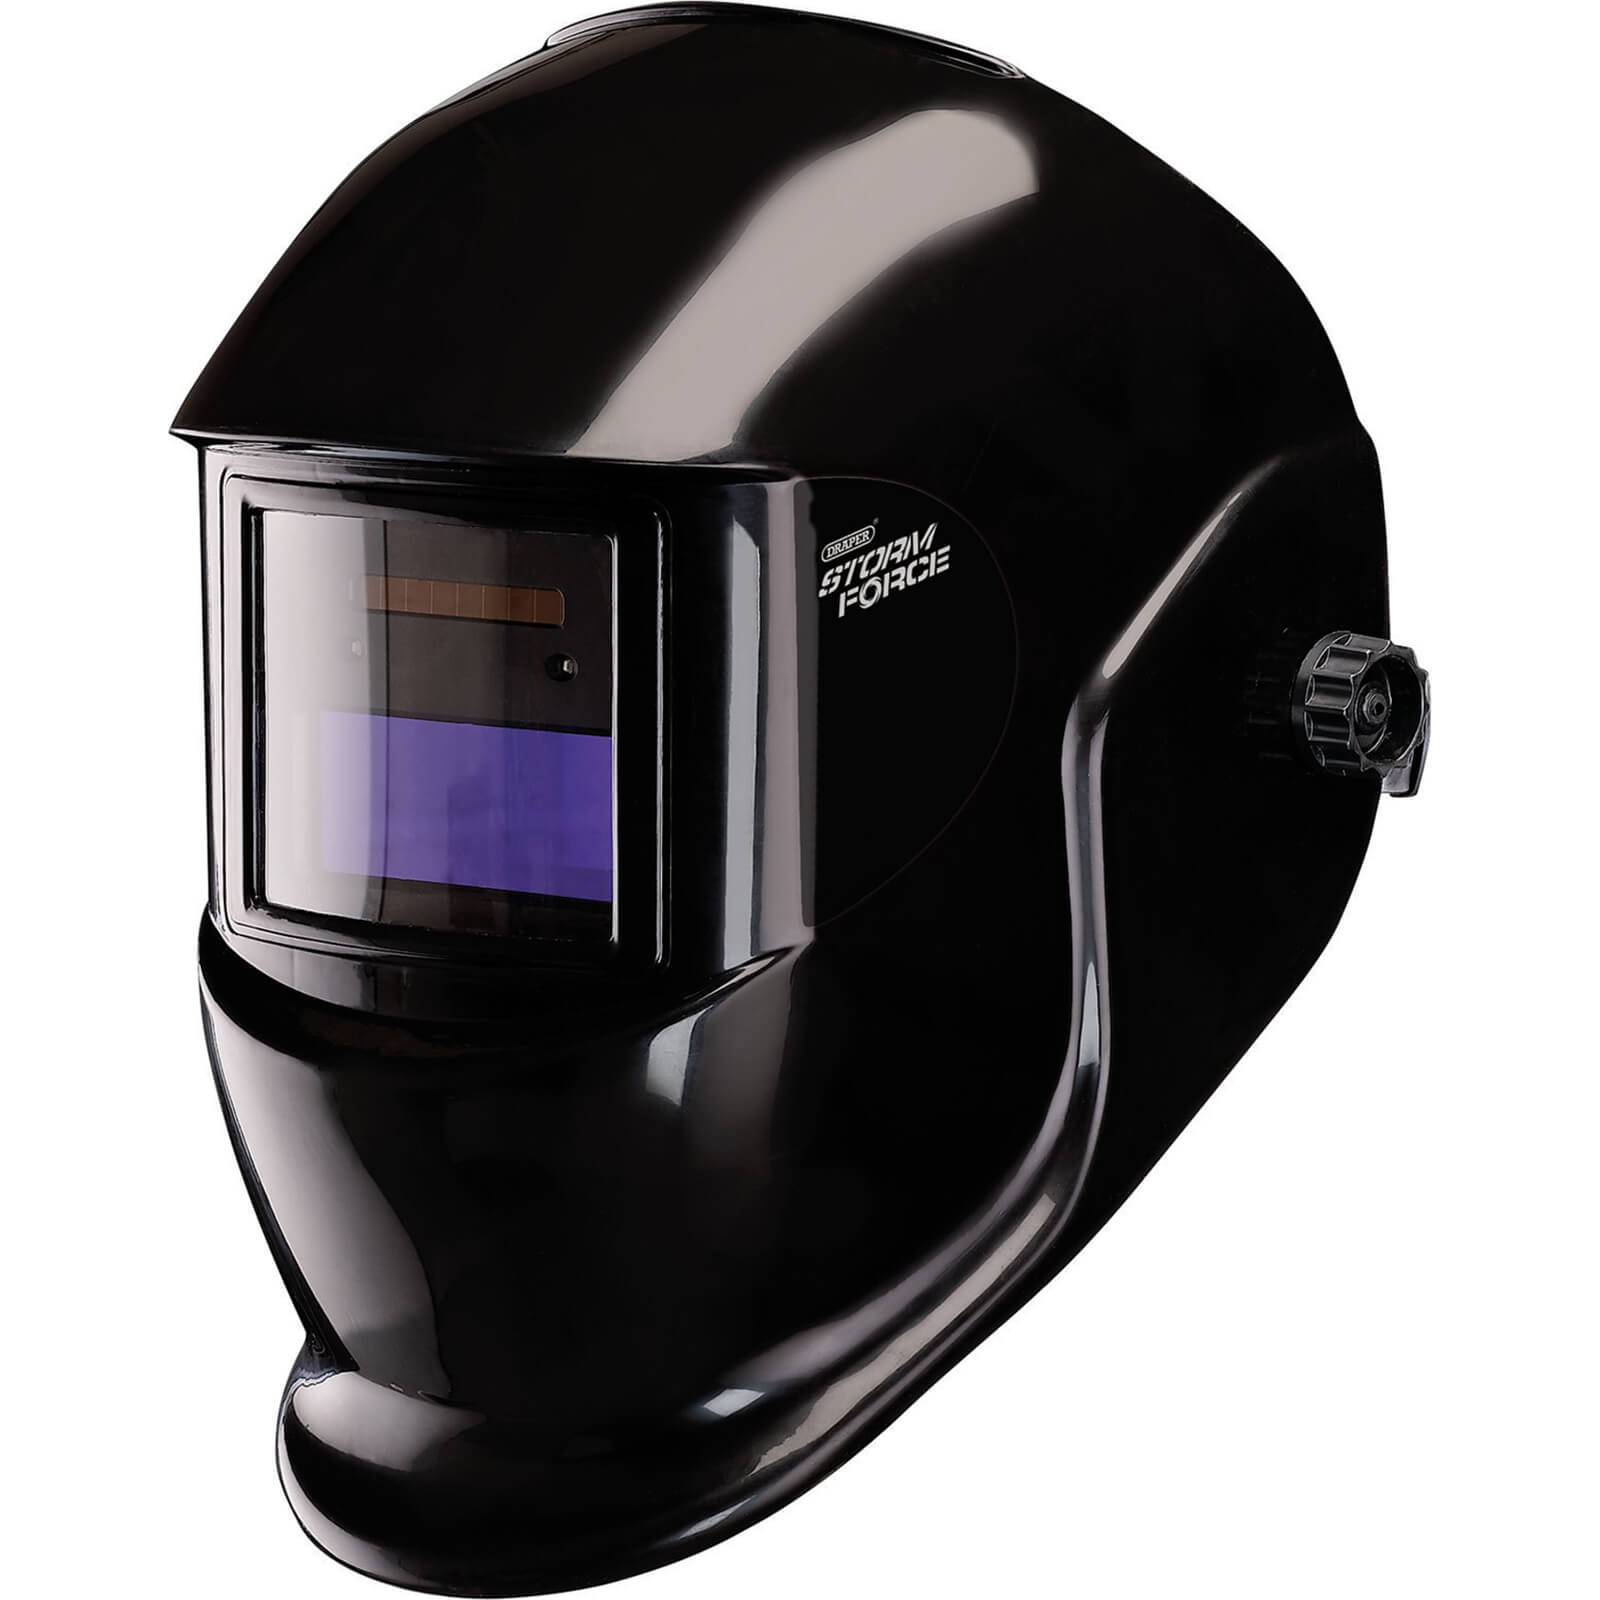 Image of Draper Storm Force Fixed Shade Auto Darkening Welding Helmet Black